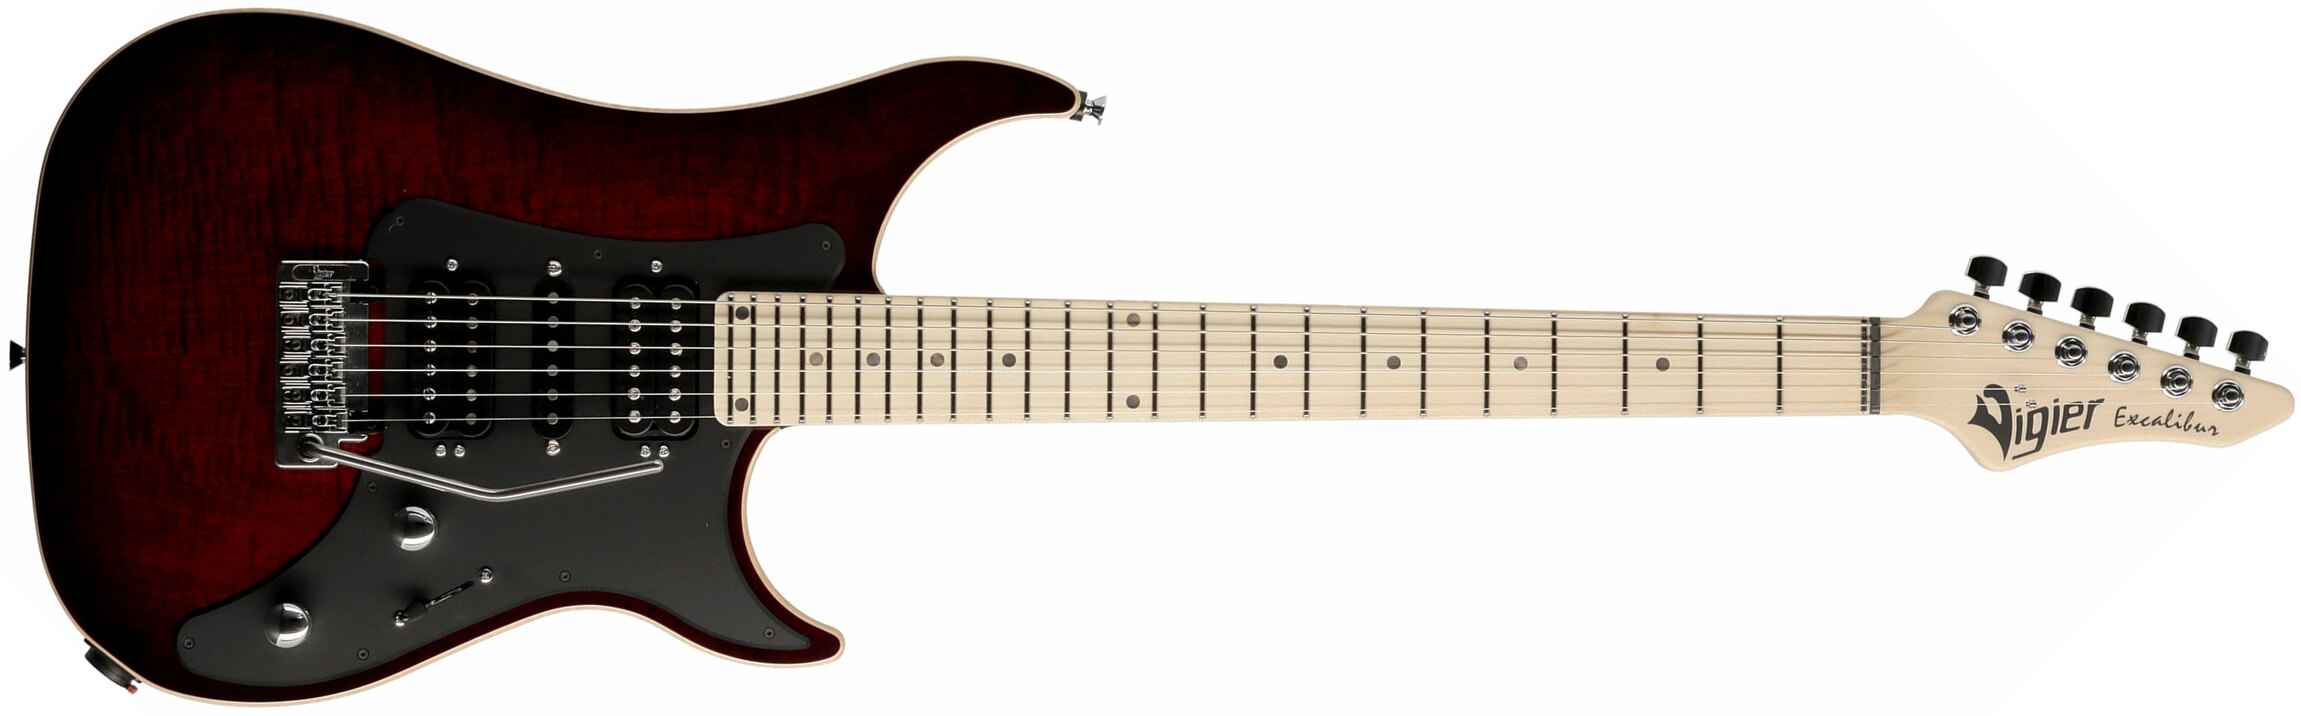 Vigier Excalibur Special Hsh Trem Mn - Deep Burgundy - Guitarra eléctrica con forma de str. - Main picture